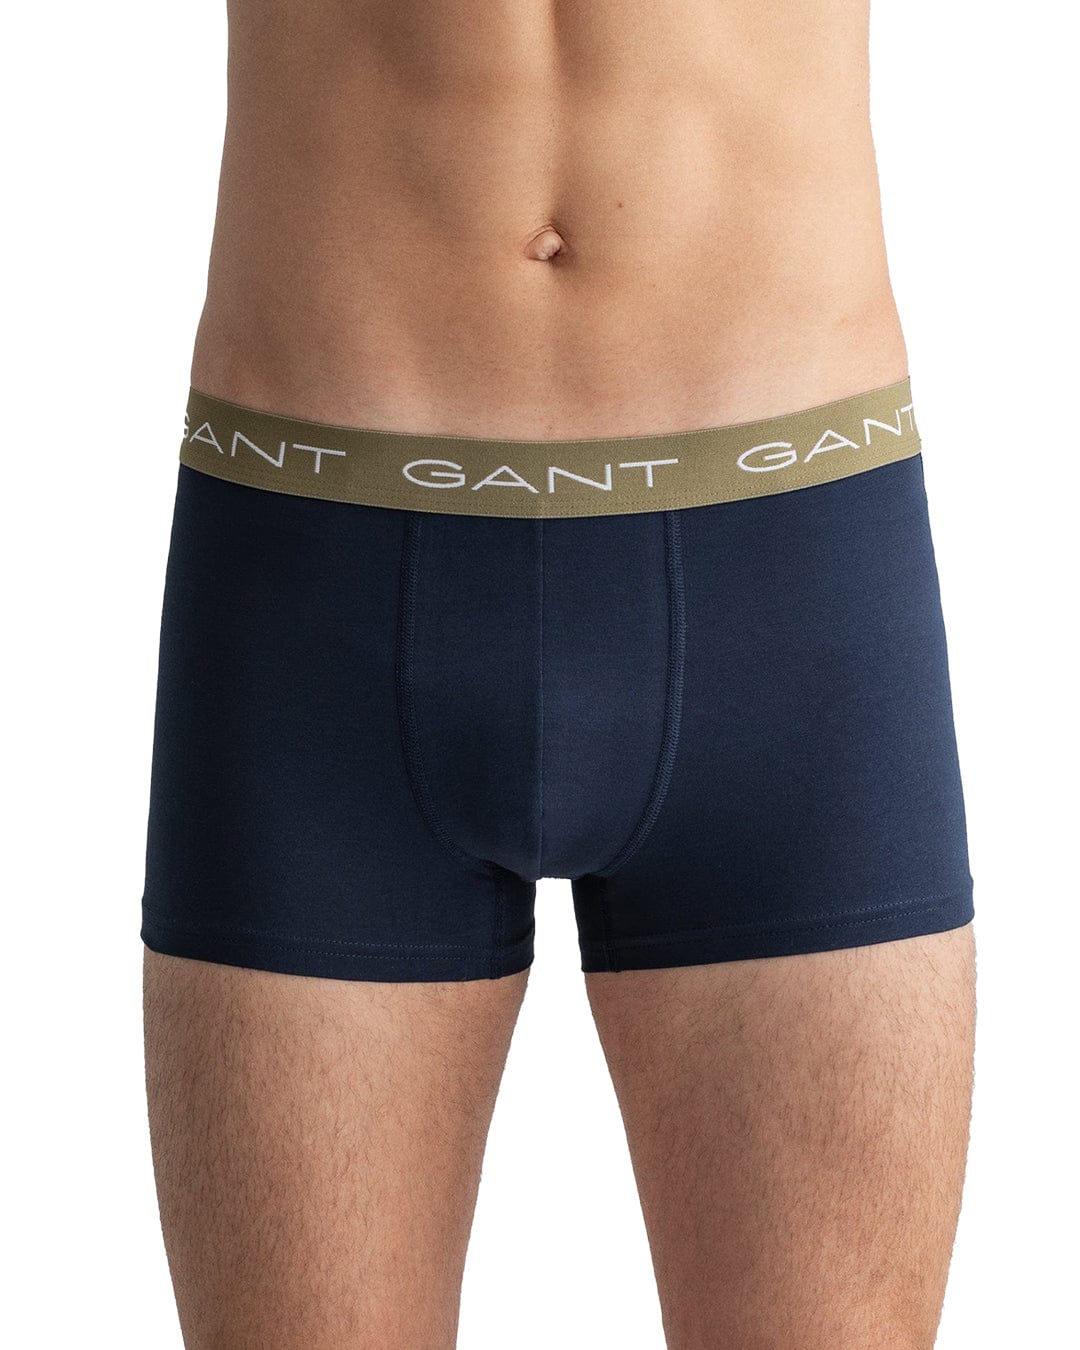 Gant Underwear Gant Green And Navy Rugby Striped Three-Pack Trunks